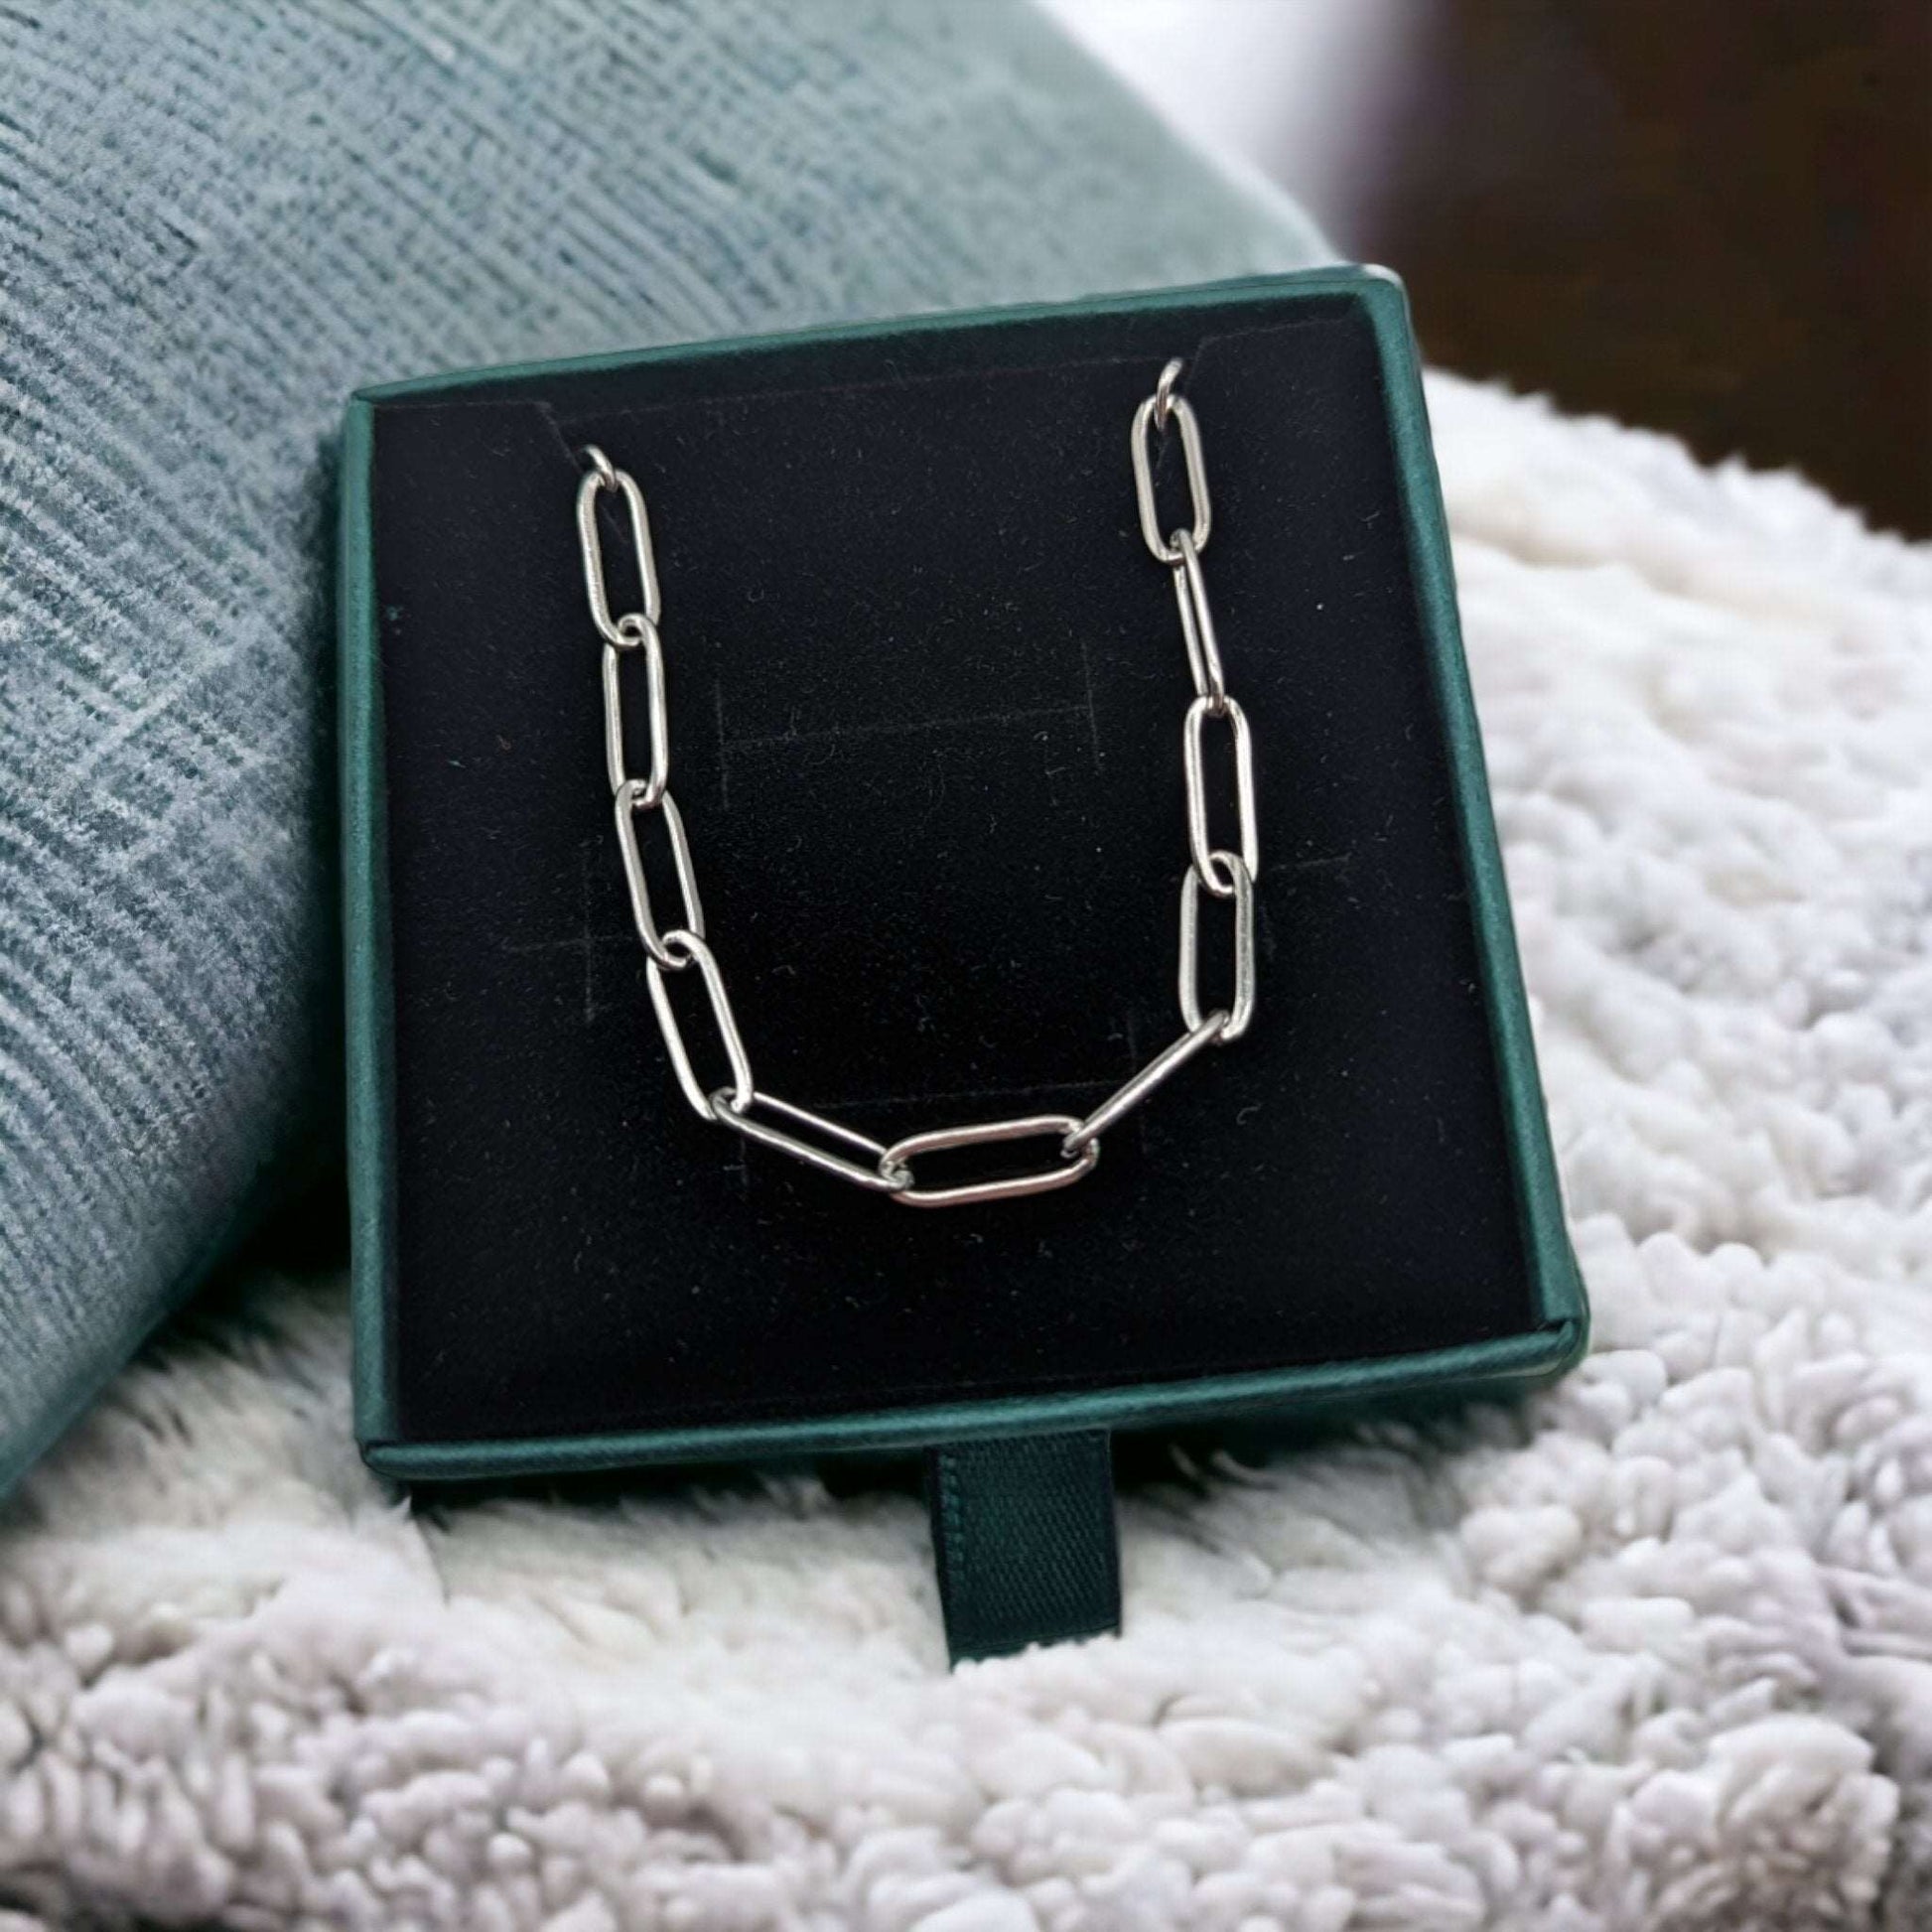 Silver paperclip chain necklace - M. Elizabeth